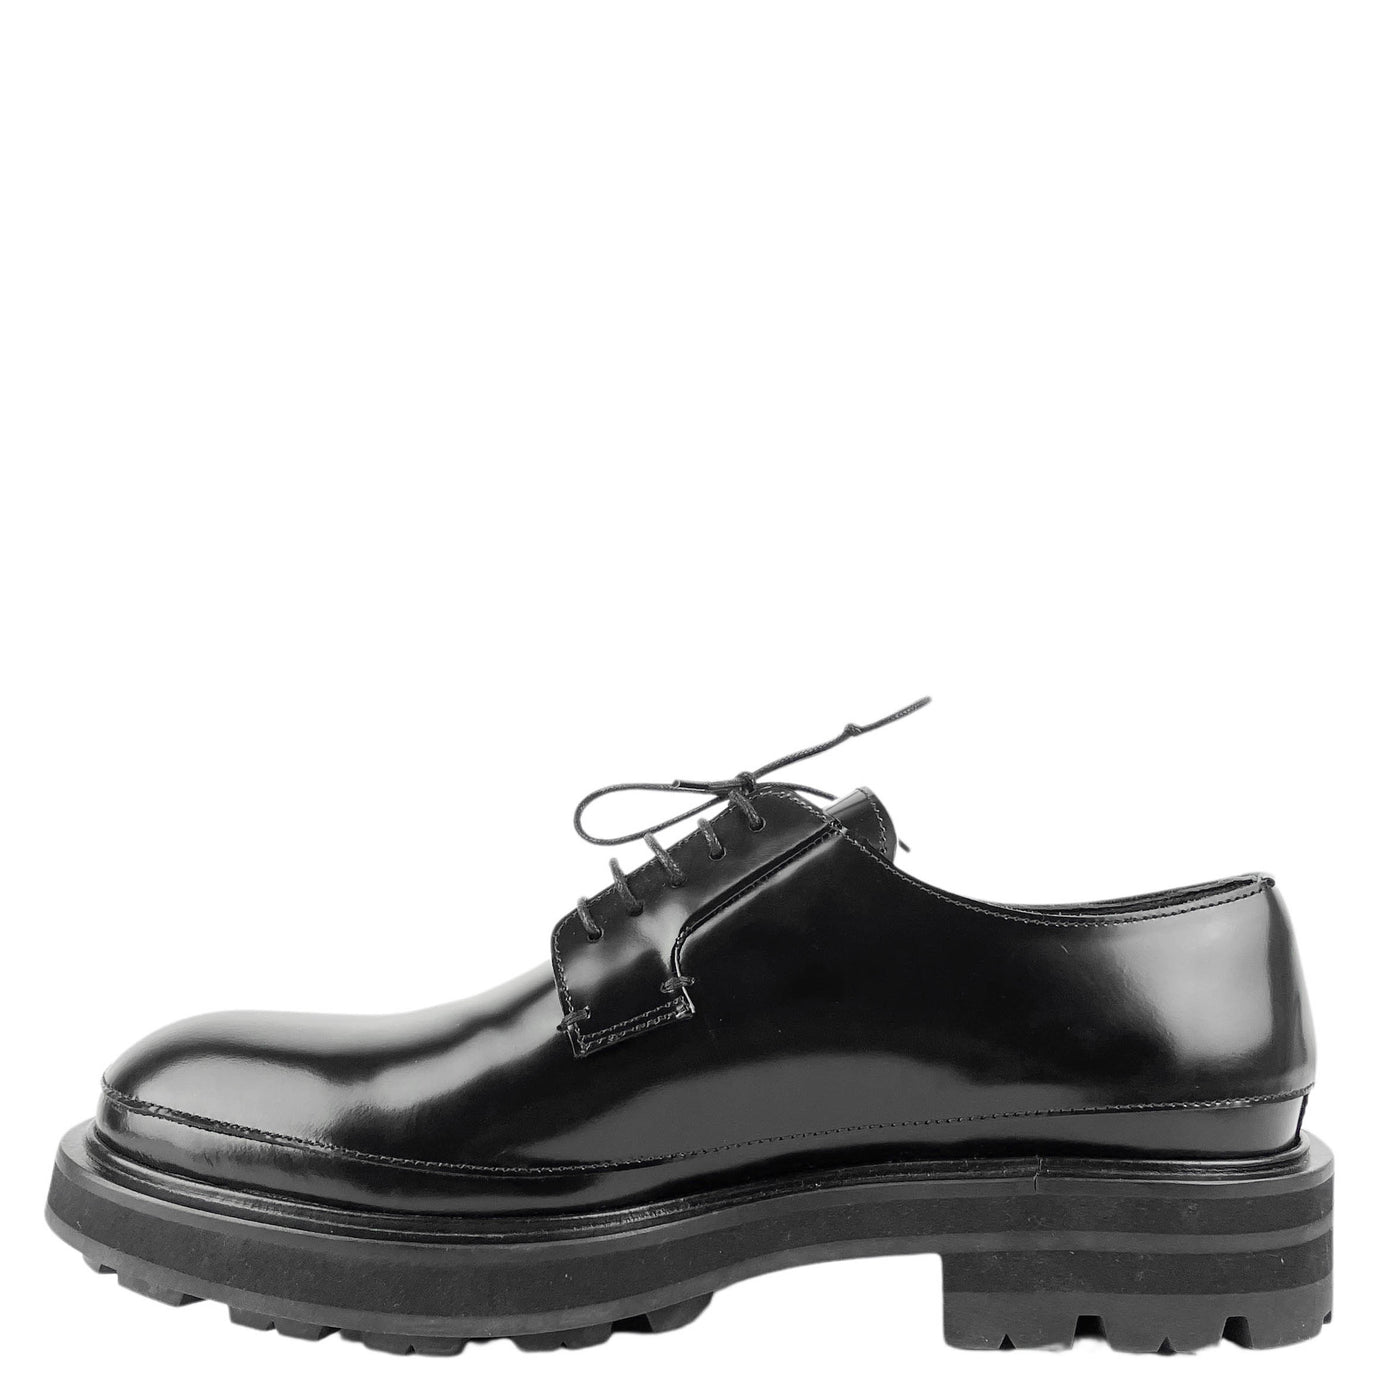 Alexander McQueen Derby Shoes in Black - Discounts on Alexander McQueen at UAL